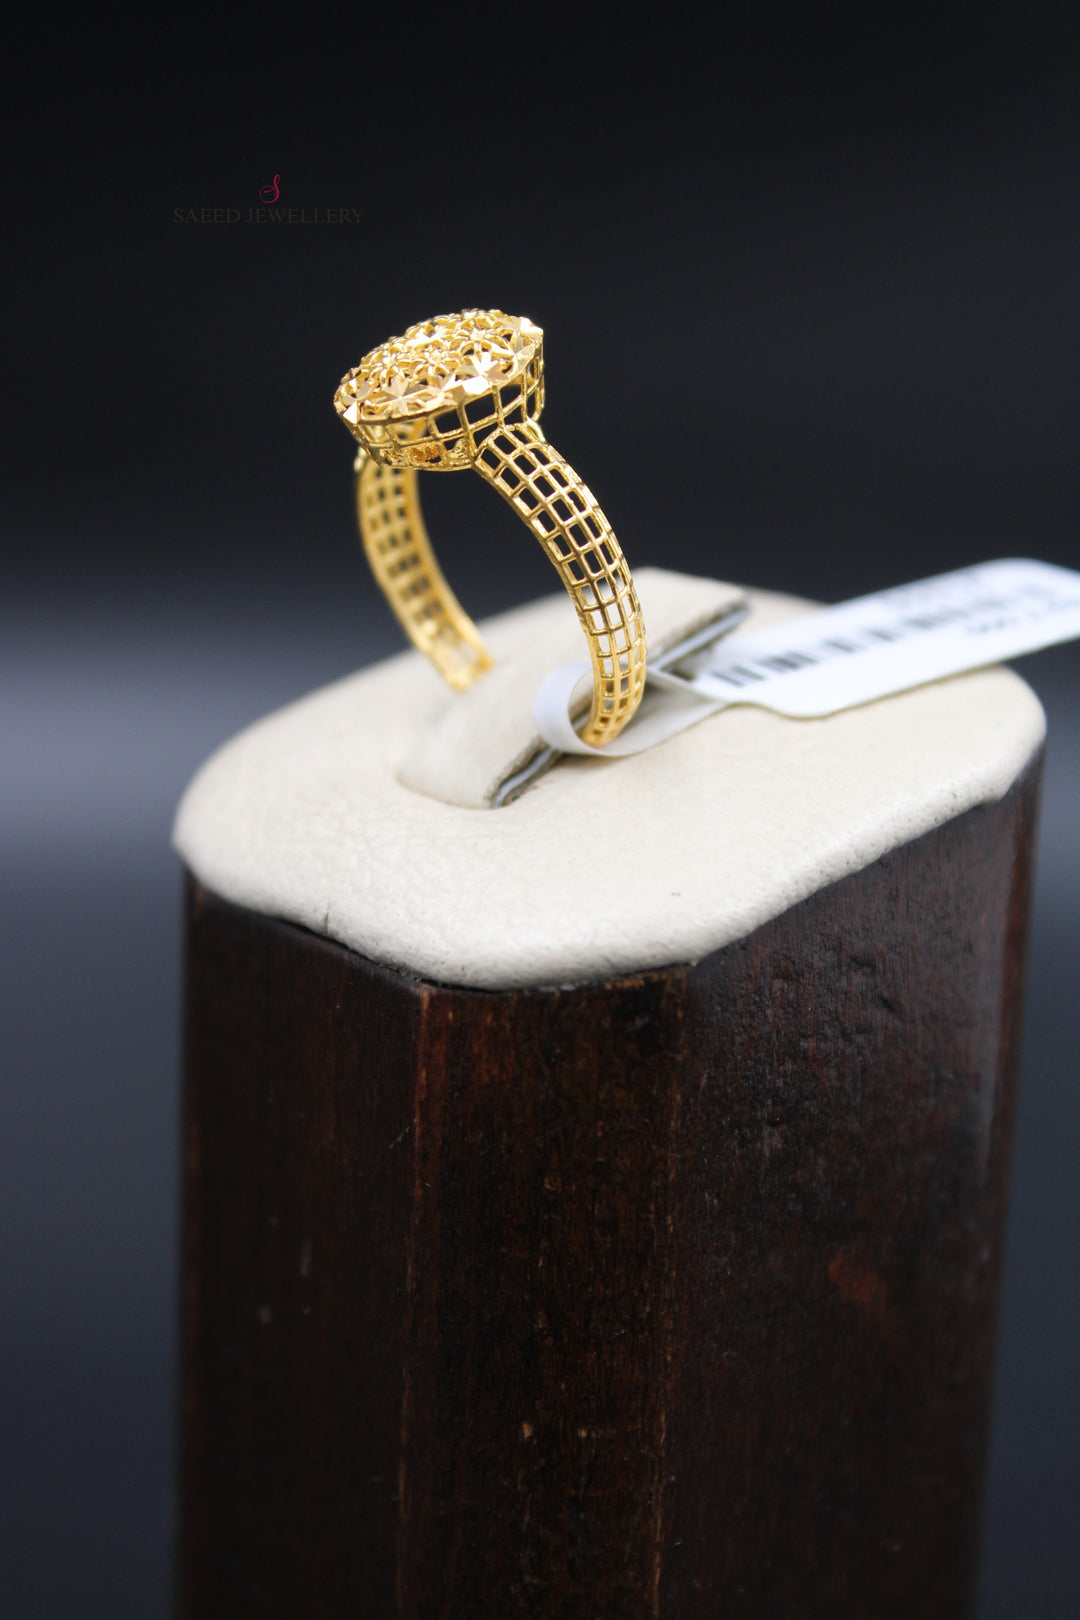 21K Light Ring Made of 21K Yellow Gold by Saeed Jewelry-خاتم-مستورد-خفيف